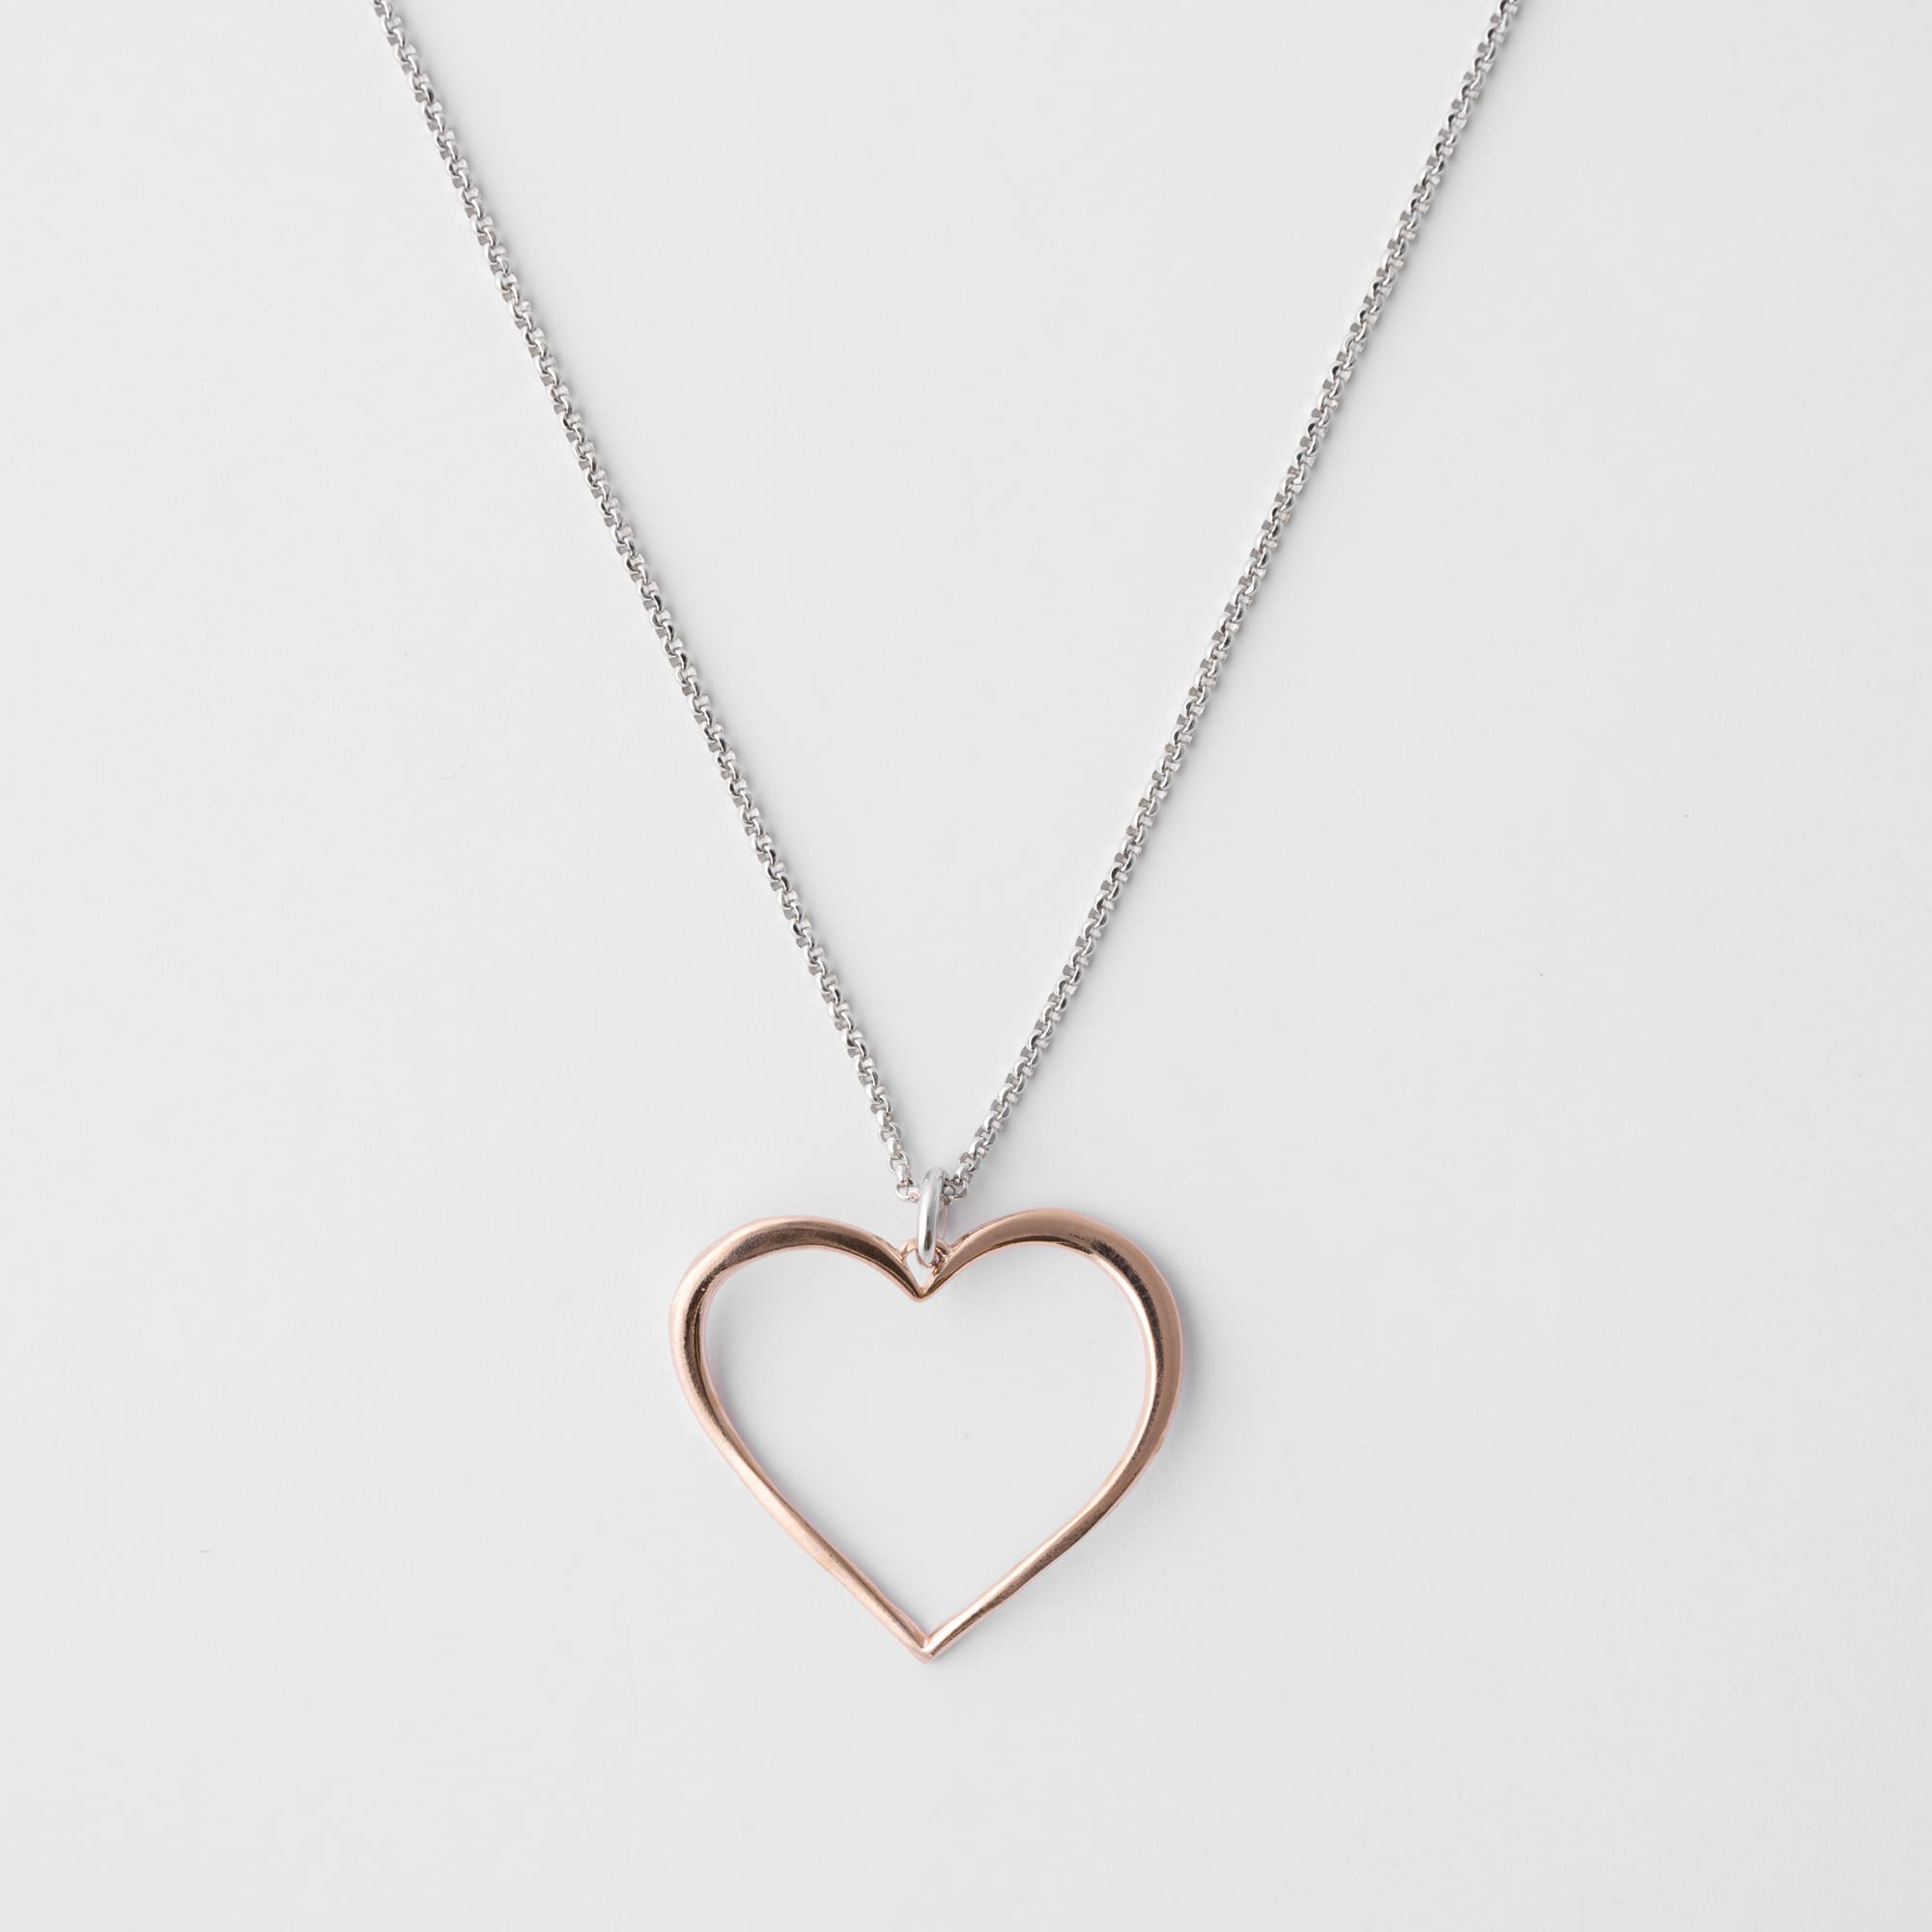 HEARTWAVE Heart Pendant Necklace Rose Gold